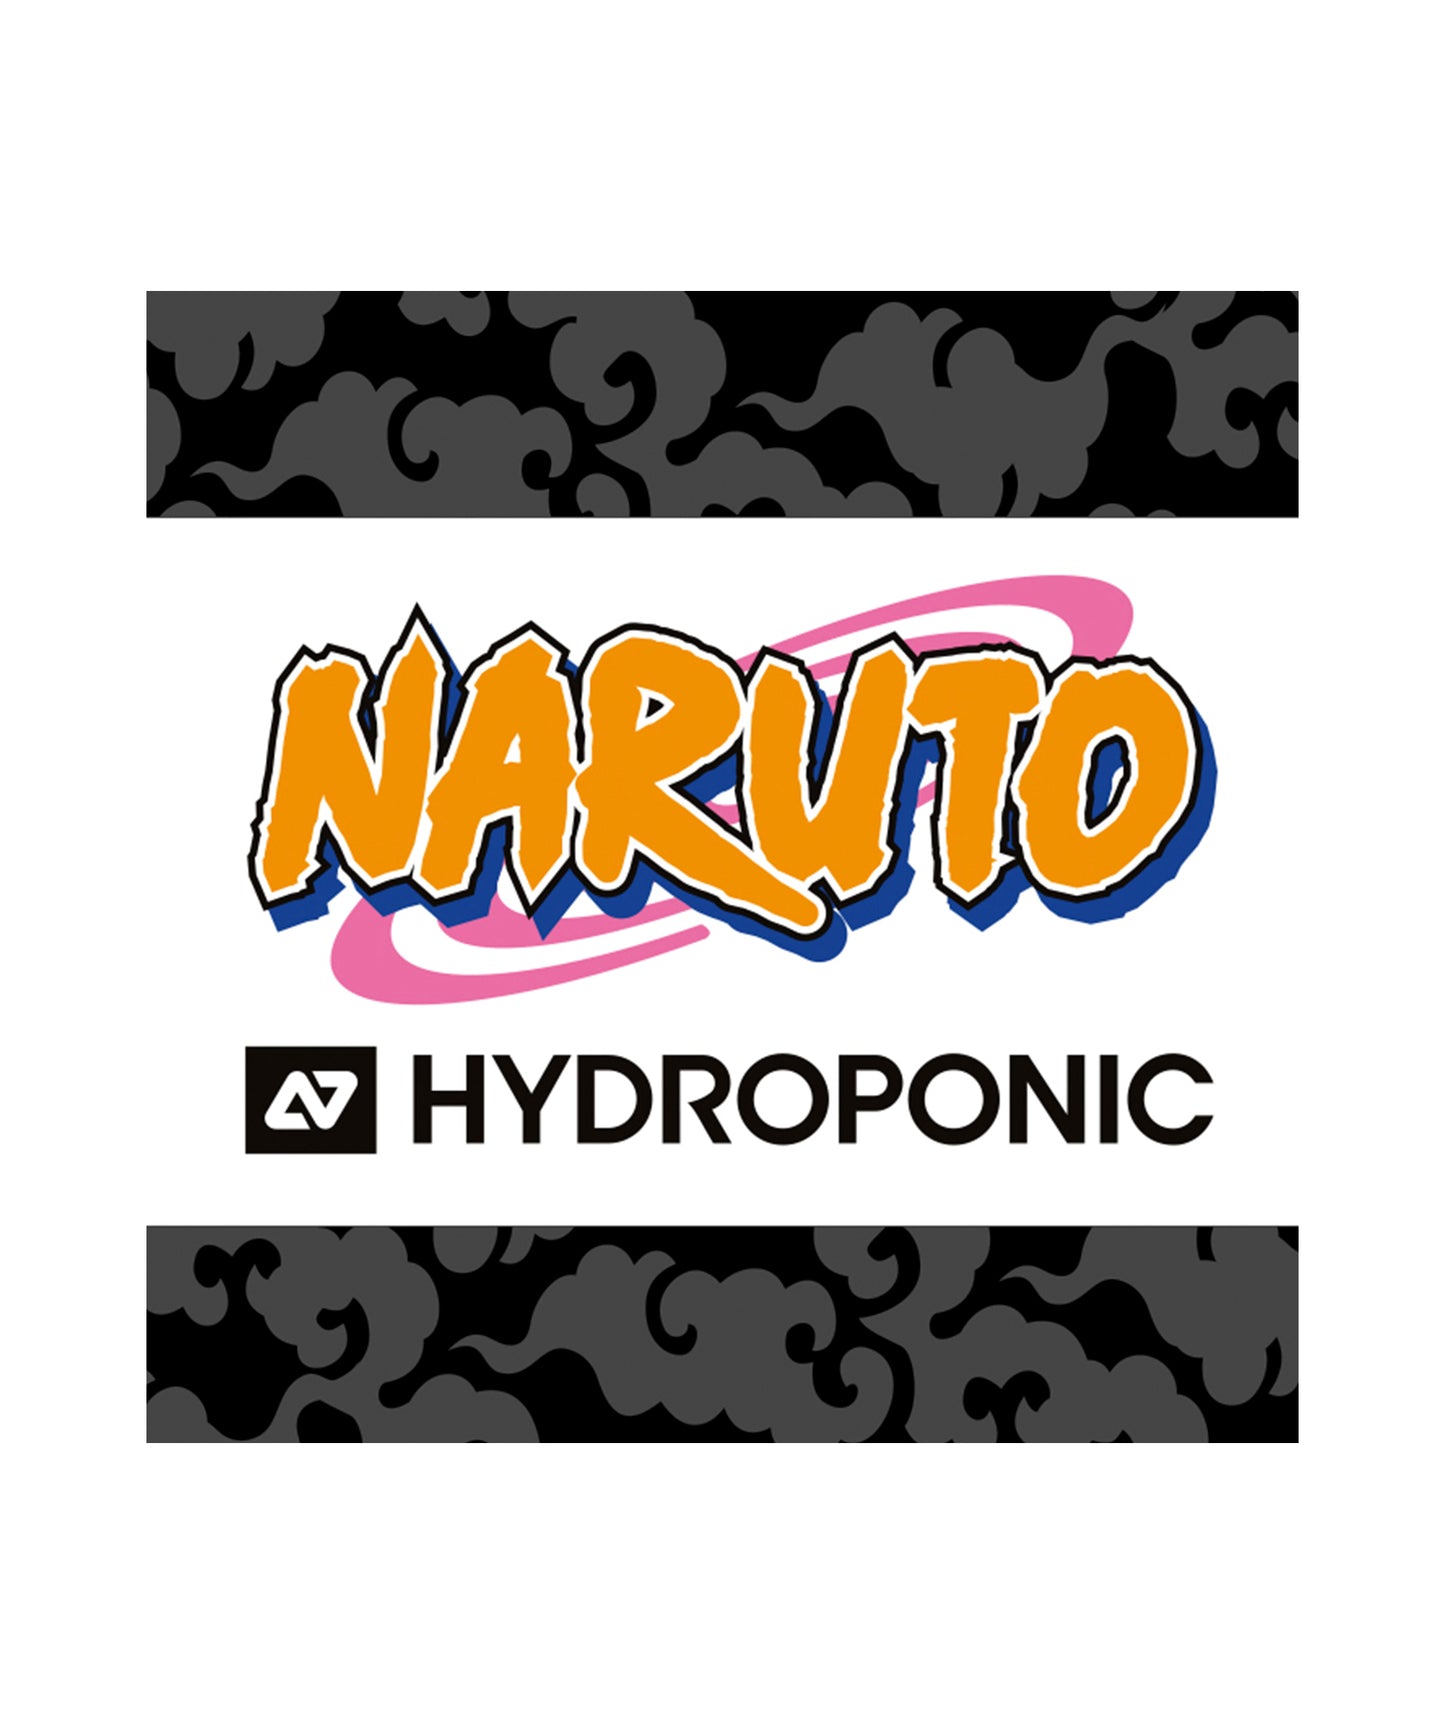 skate-completo-hydroponic-naruto-a-punto-para-patinar-ilustraciones-del-famoso-manga-Naruto-componentes-de-calidad